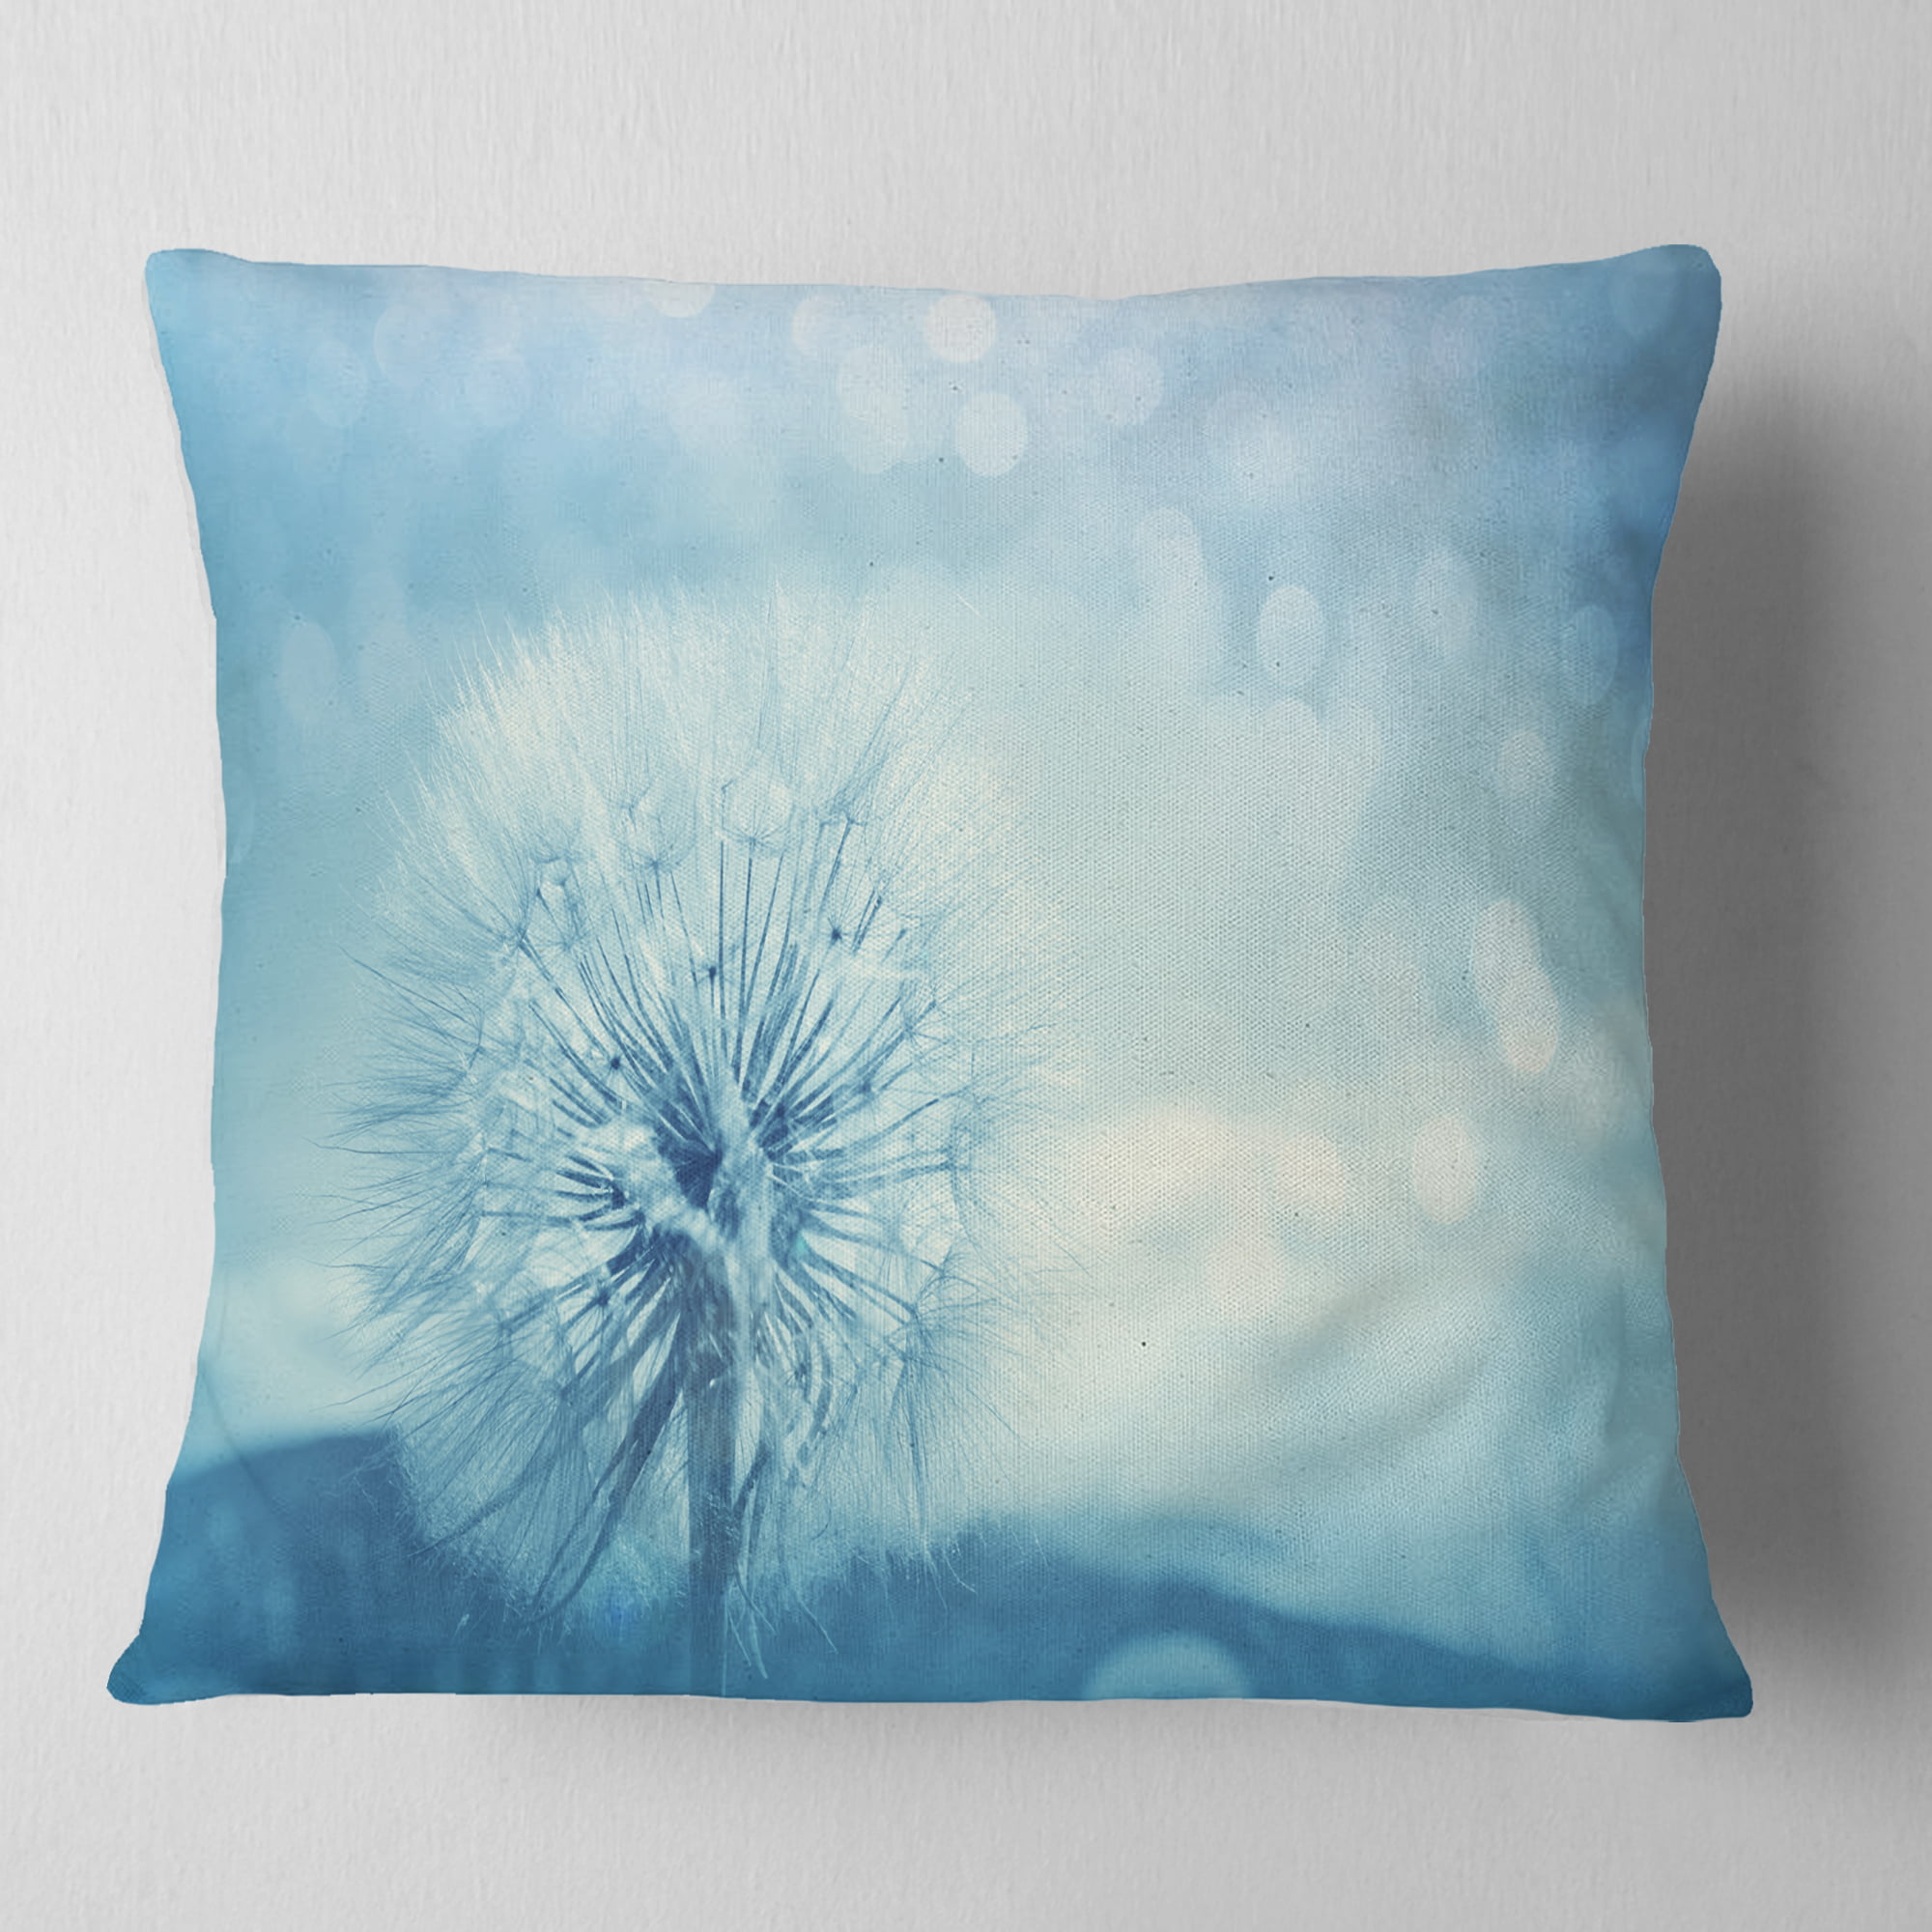 Purple/White Dandelion cotton decorative throw pillow cover/cushion cover 18x18" 